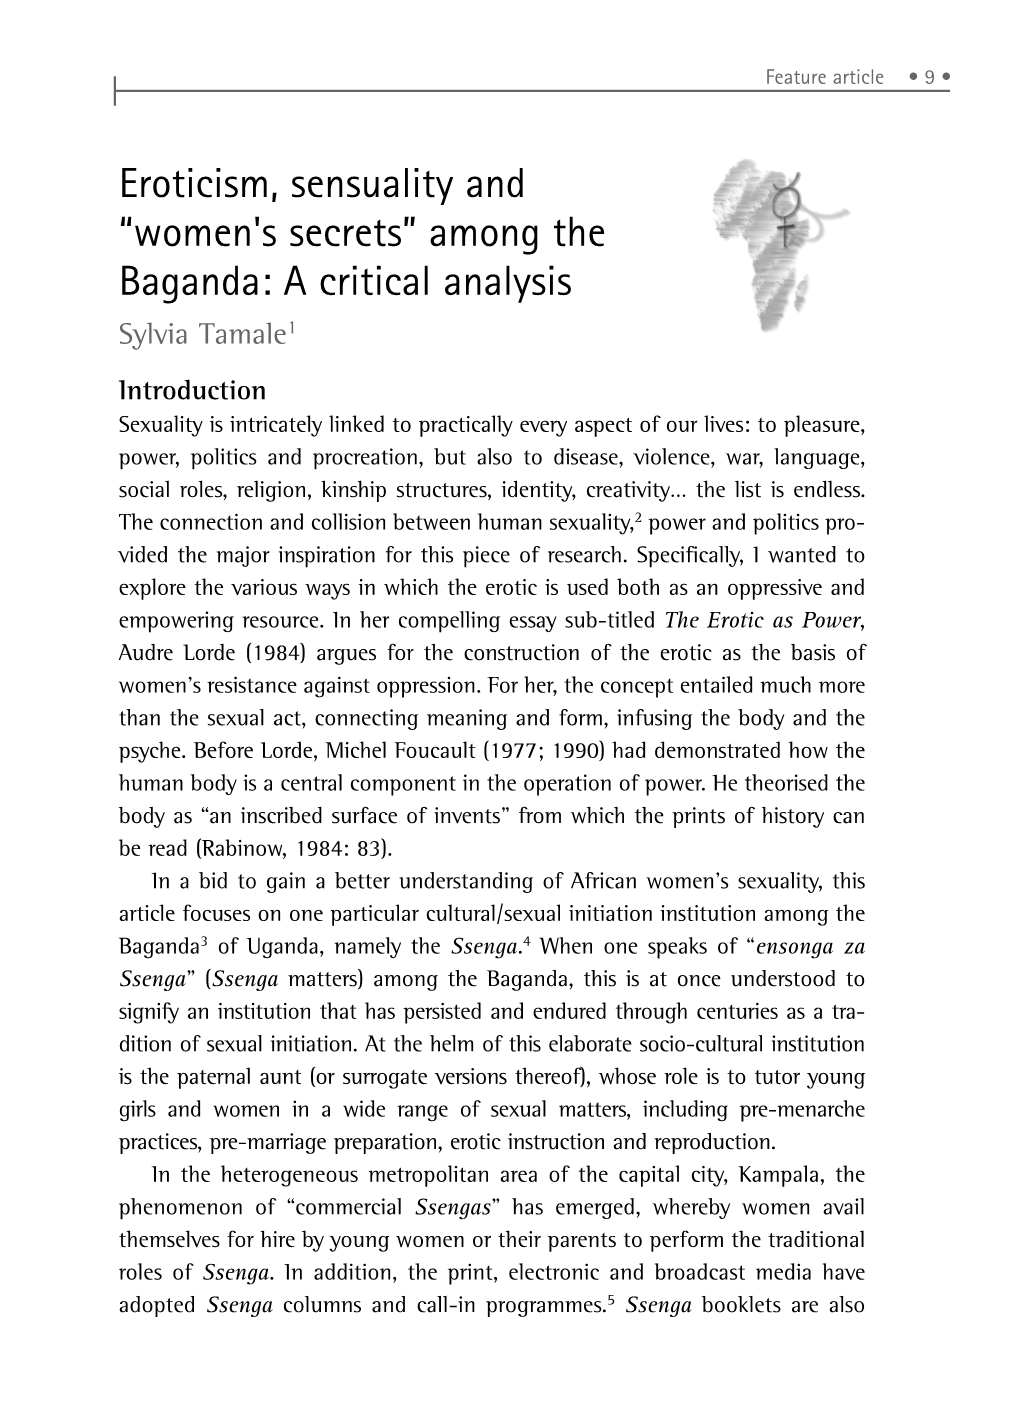 "Women's Secrets" Among the Baganda